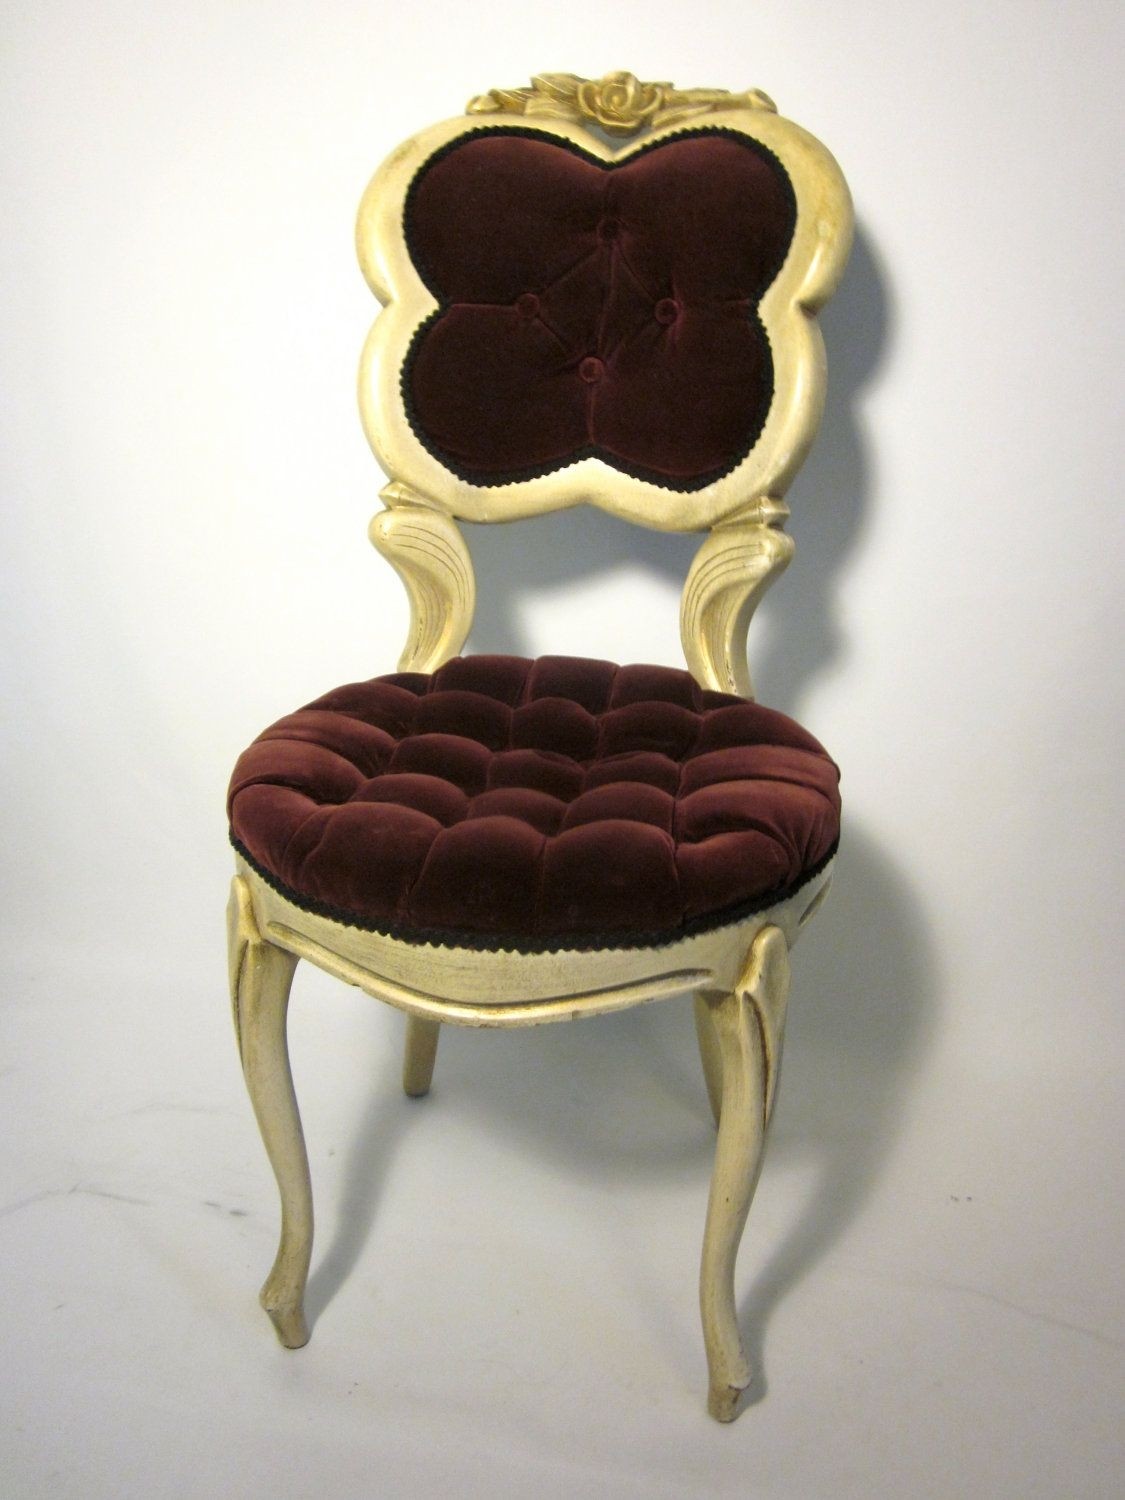 Adjustable height vanity chair